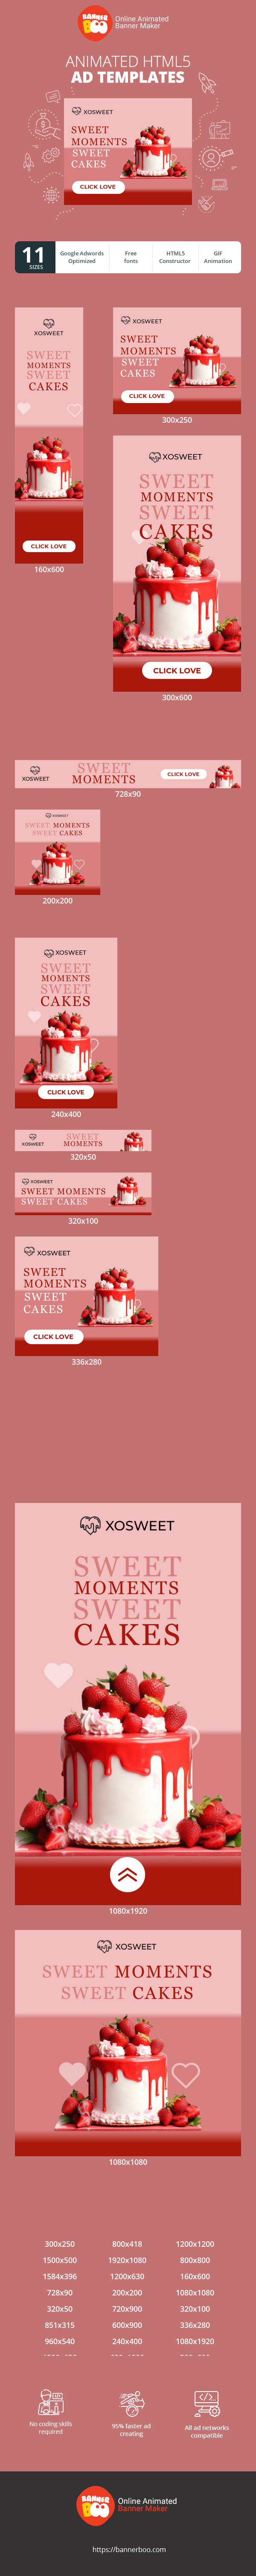 Szablon reklamy banerowej — Sweet Moments Sweet Cakes — Valentine's Day